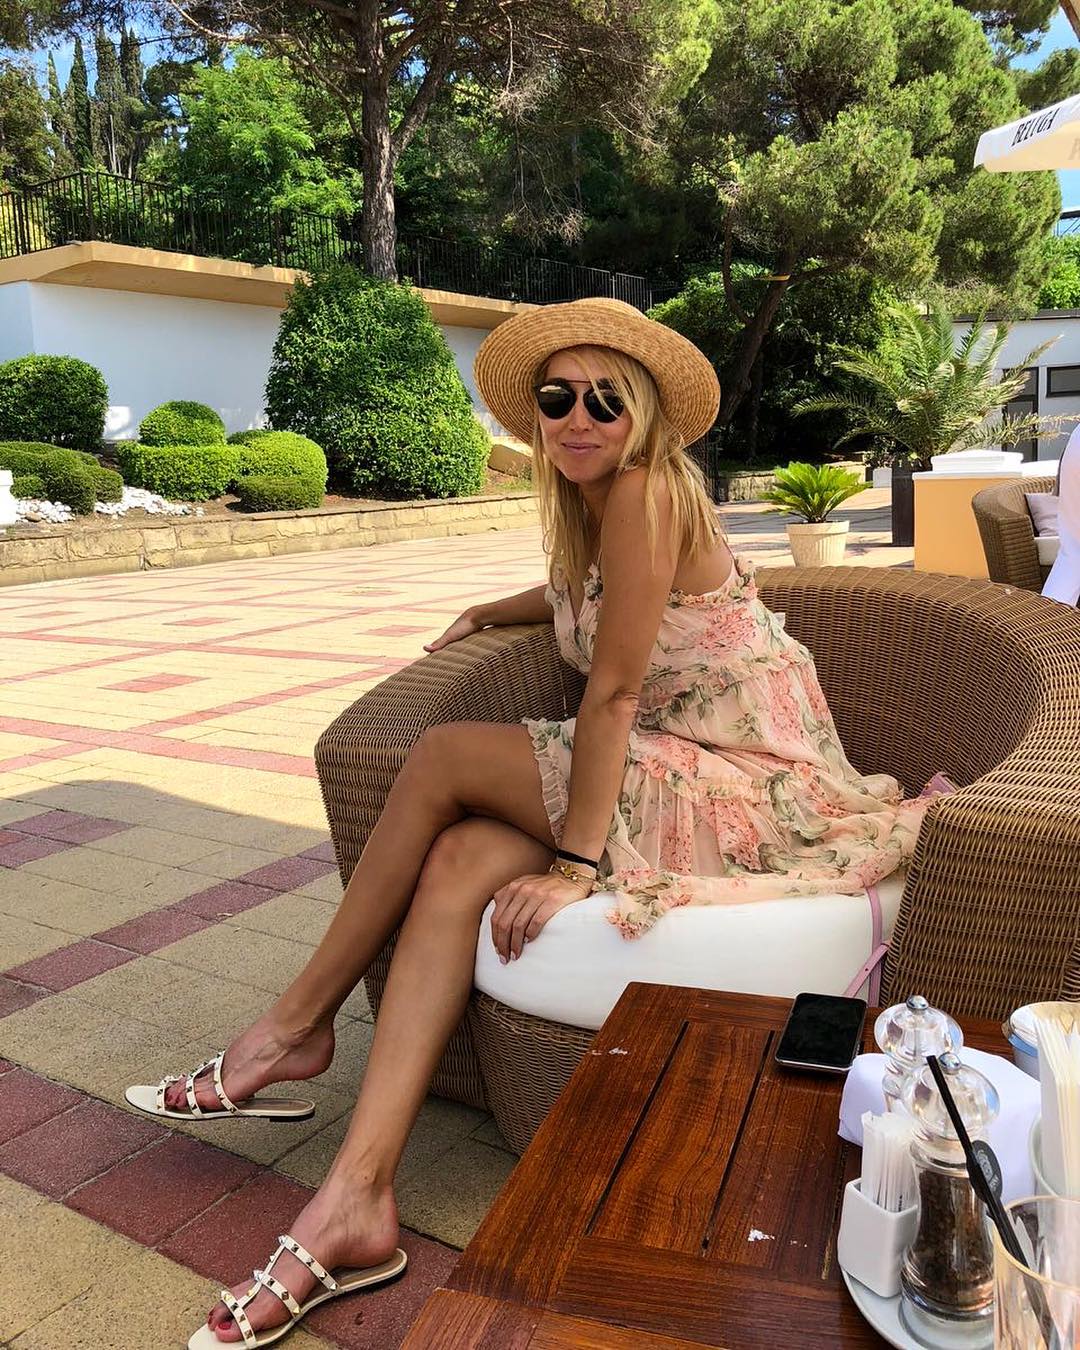 Елена Веснина обновила свою фотоленту в Инстаграм